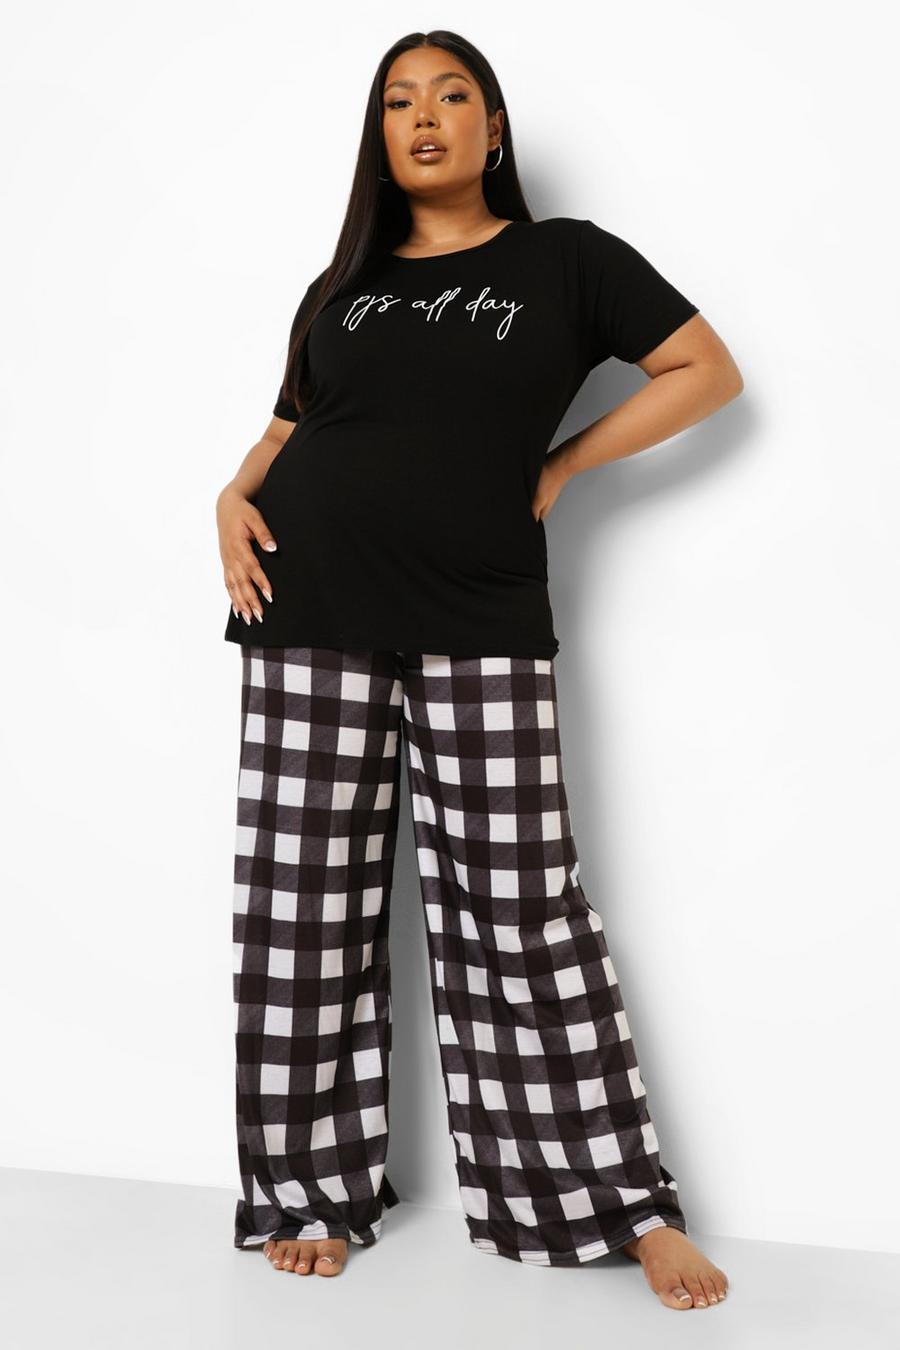 Black svart Plus 'PJs All Day' Slogan Top & Gingham Trousers Pyjama Set